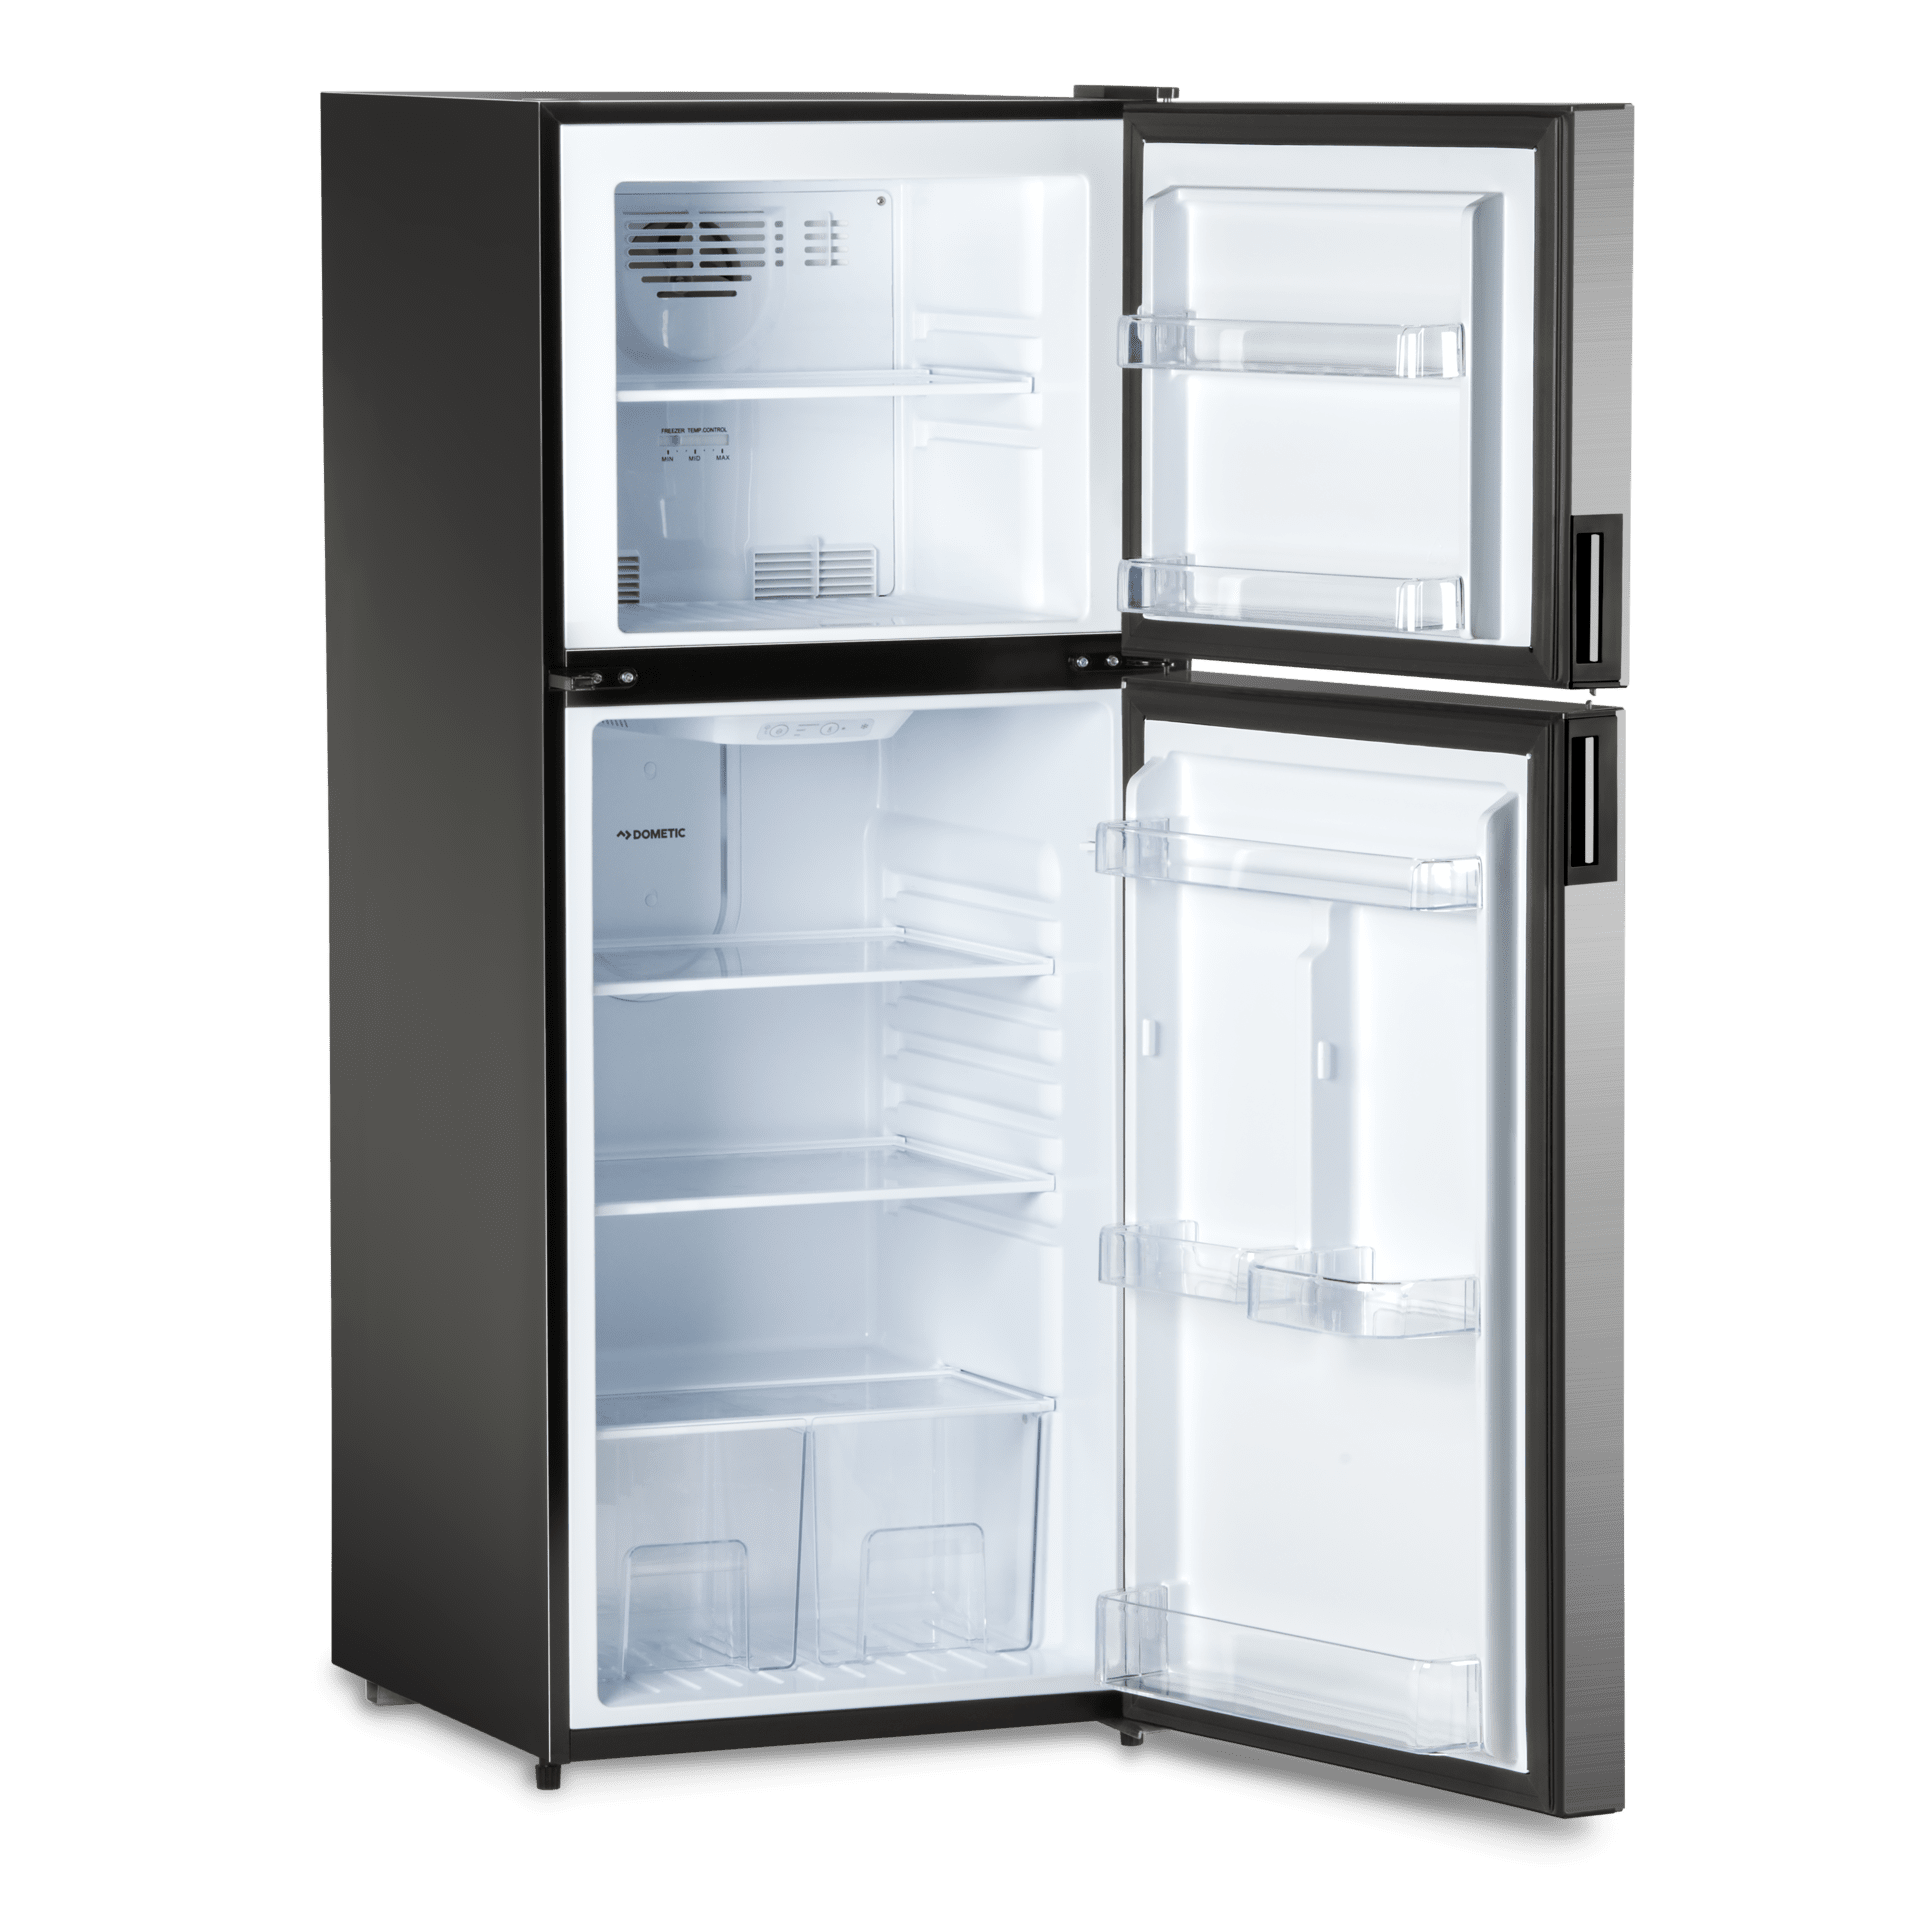 16++ Dometic refrigerator interior light assembly ideas